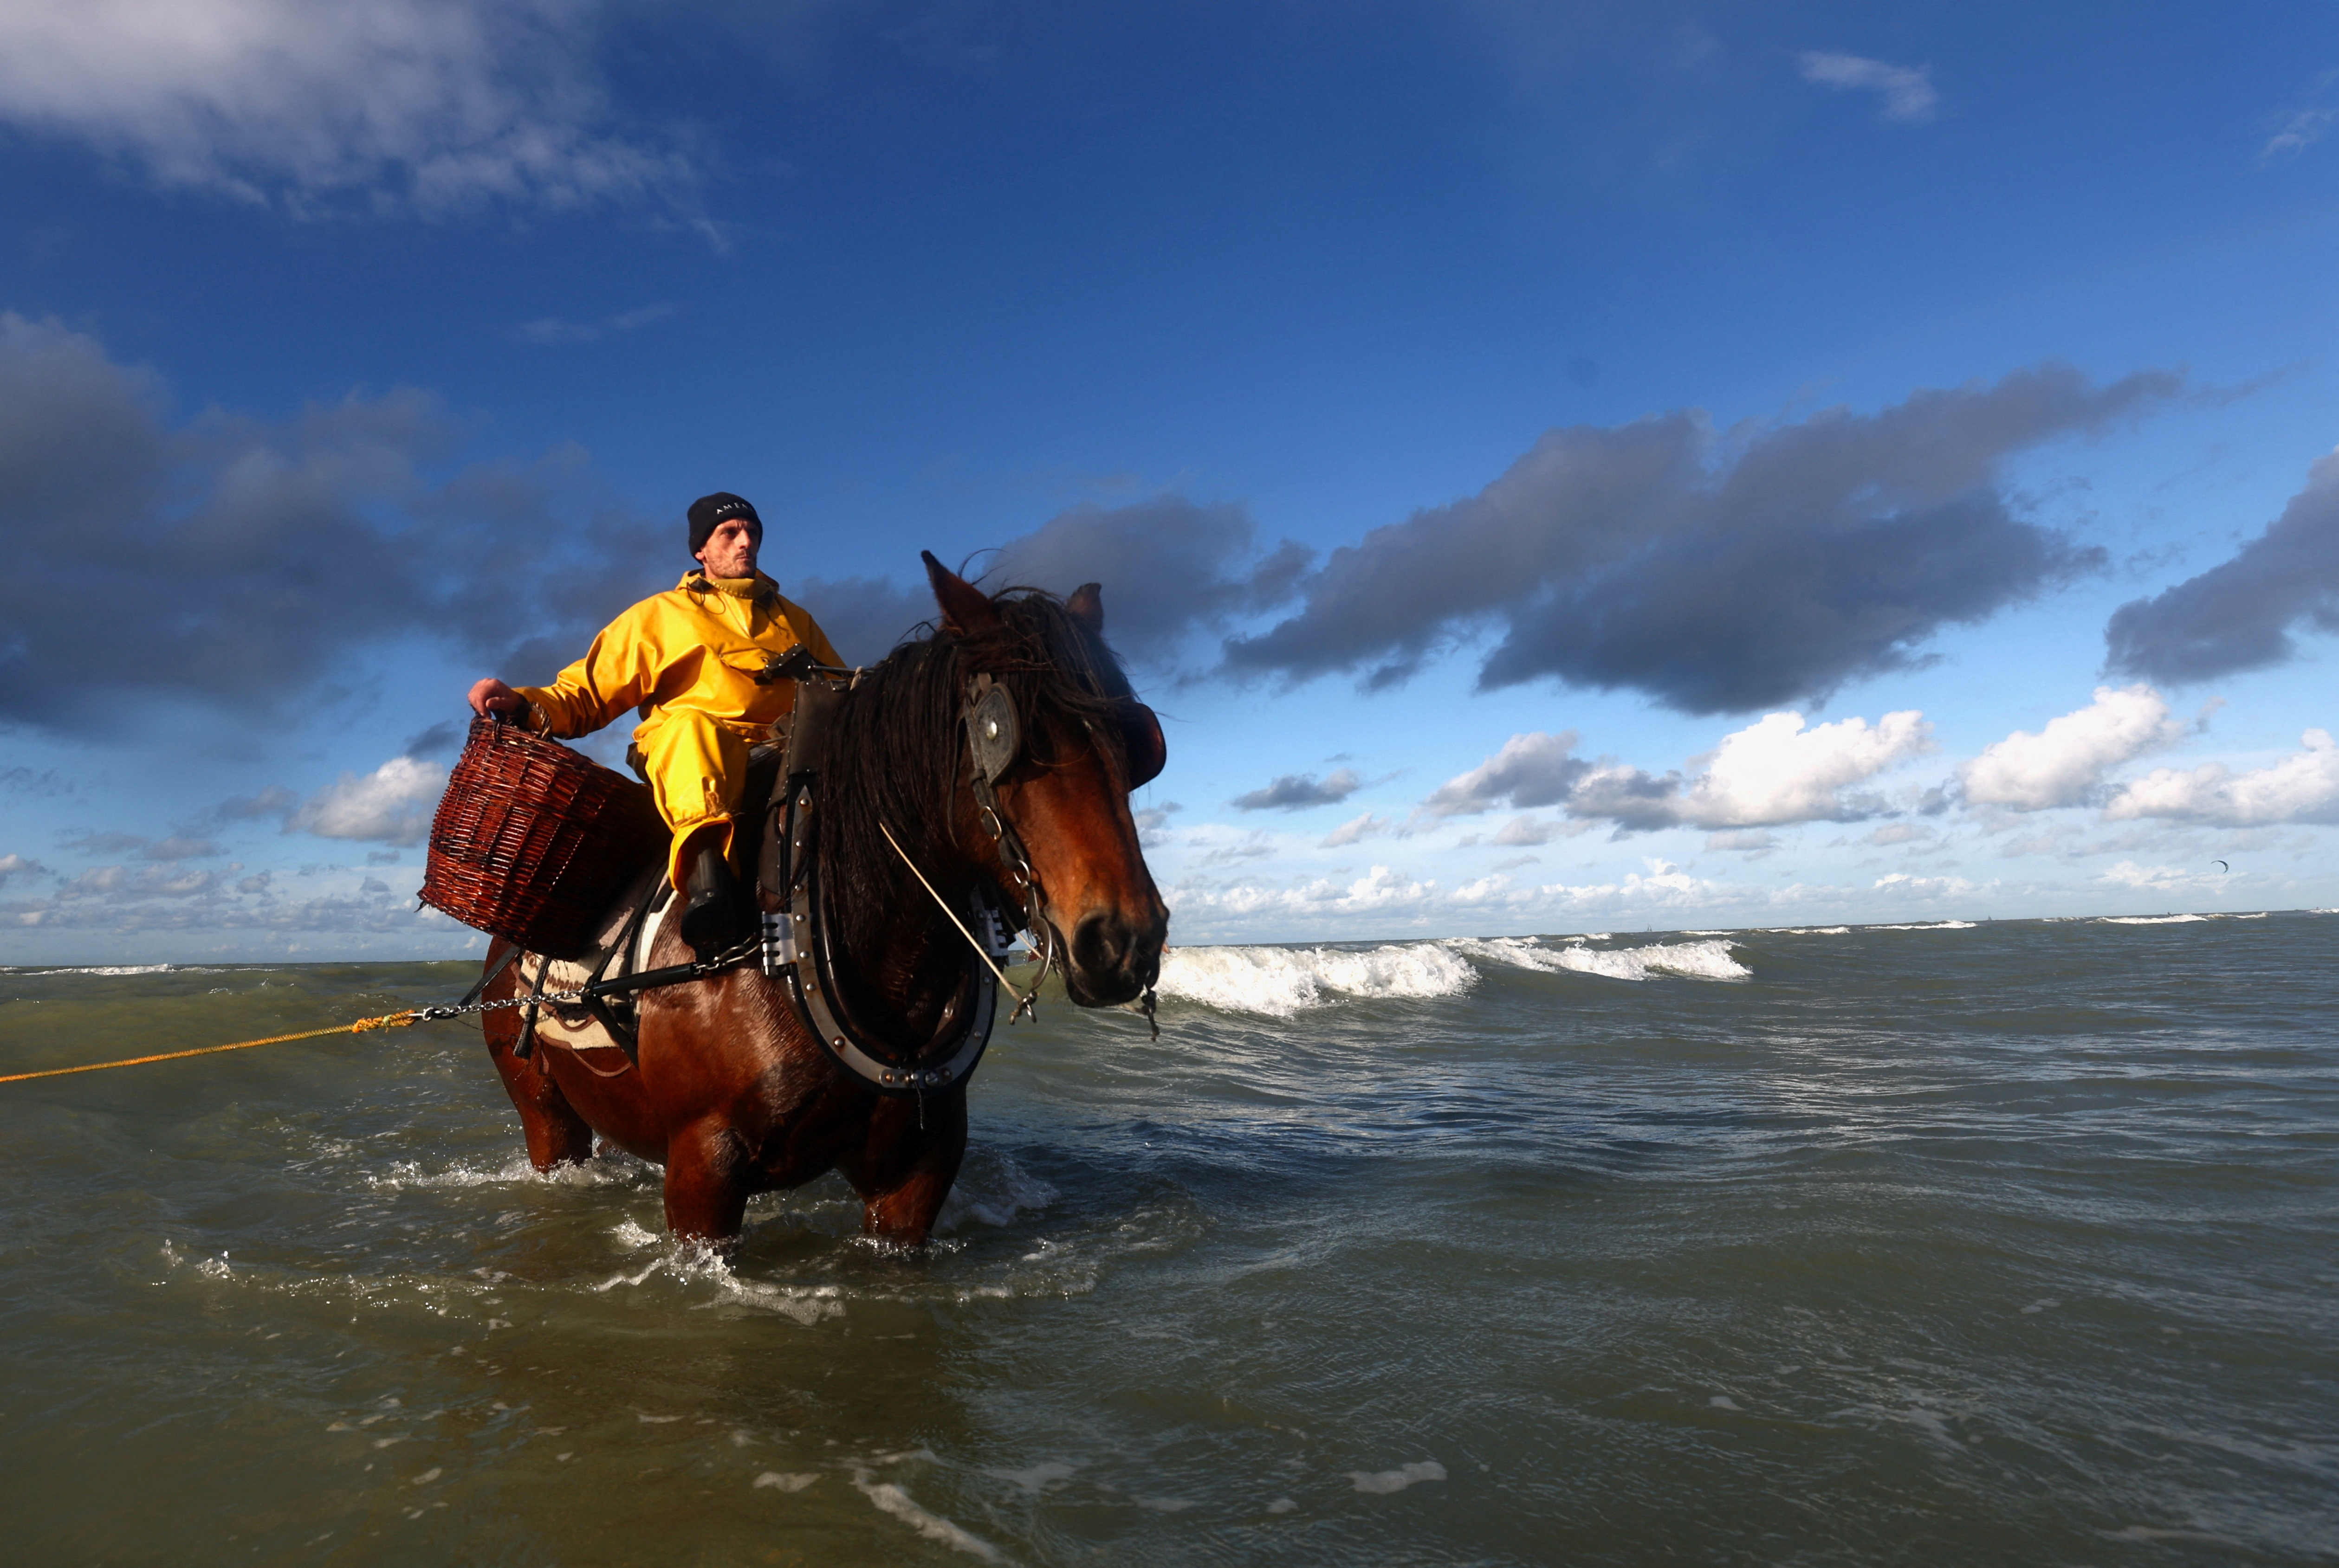 The coastal village of Oostduinkerke in Belgium is the last place in the world where horseback shrimp fishing is still practiced. /Yves Herman/Reuters